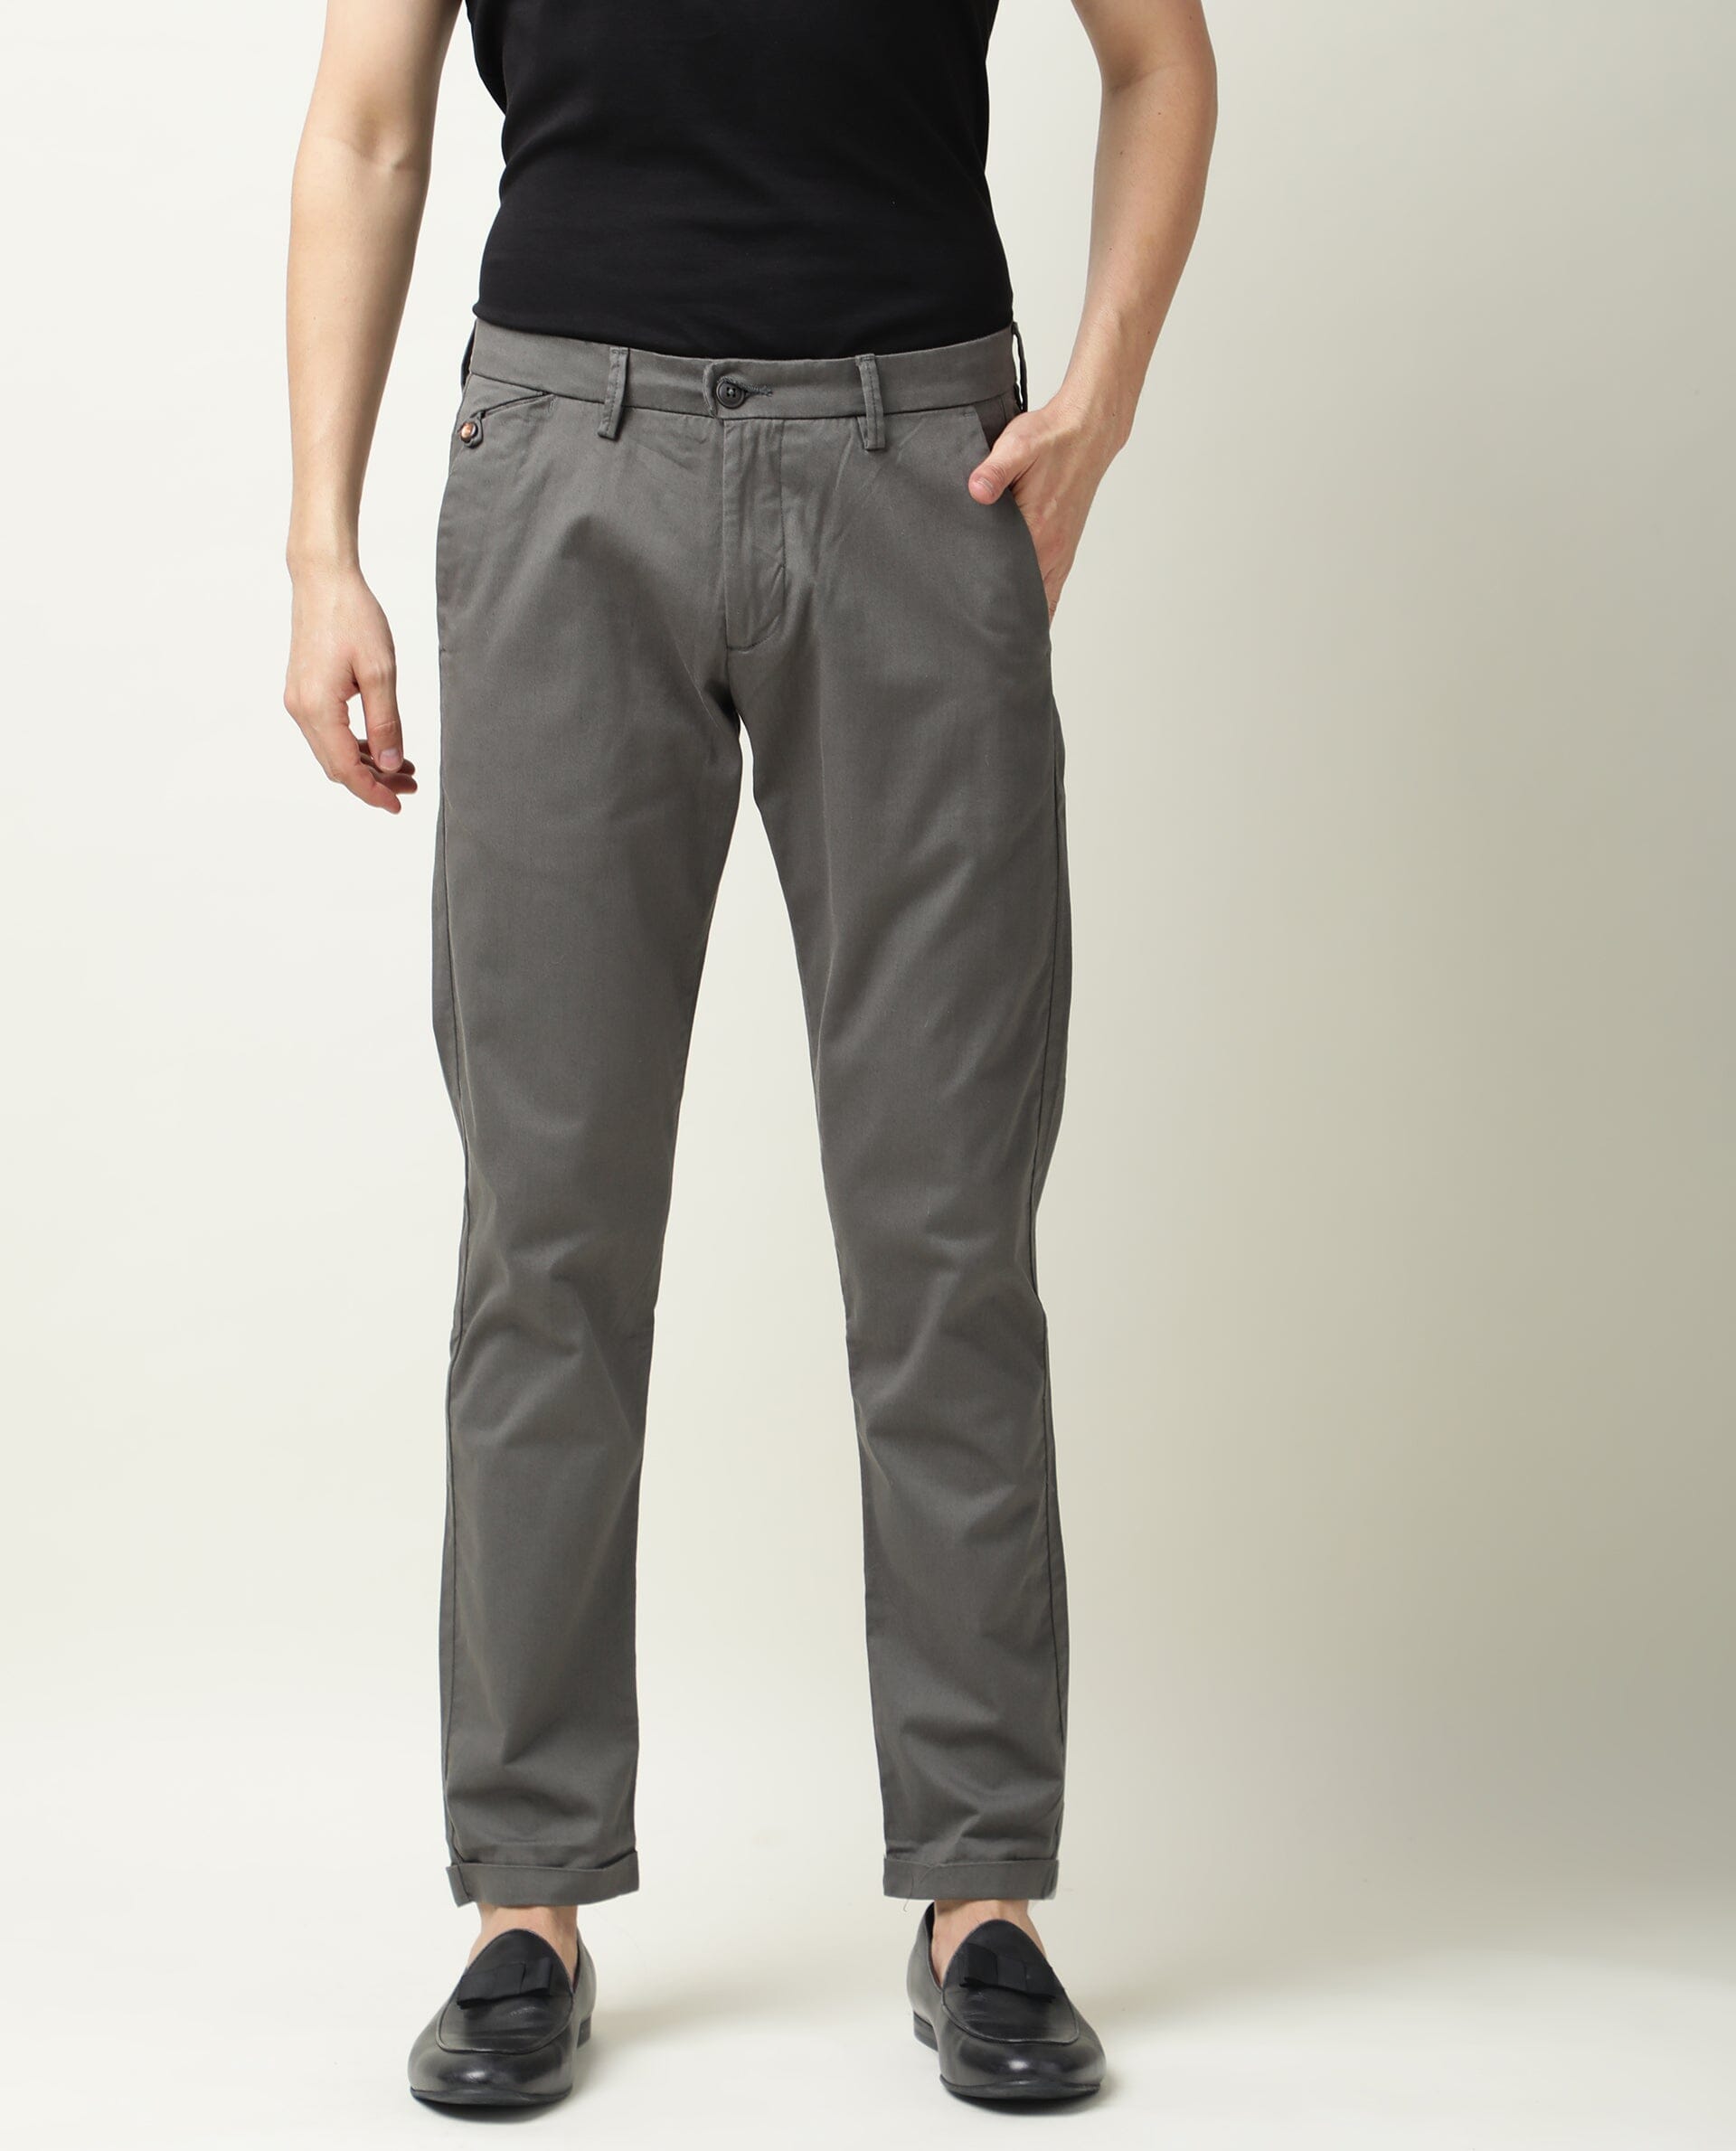 Shop Stylish Dark Grey Stretchable Pants for Men Online